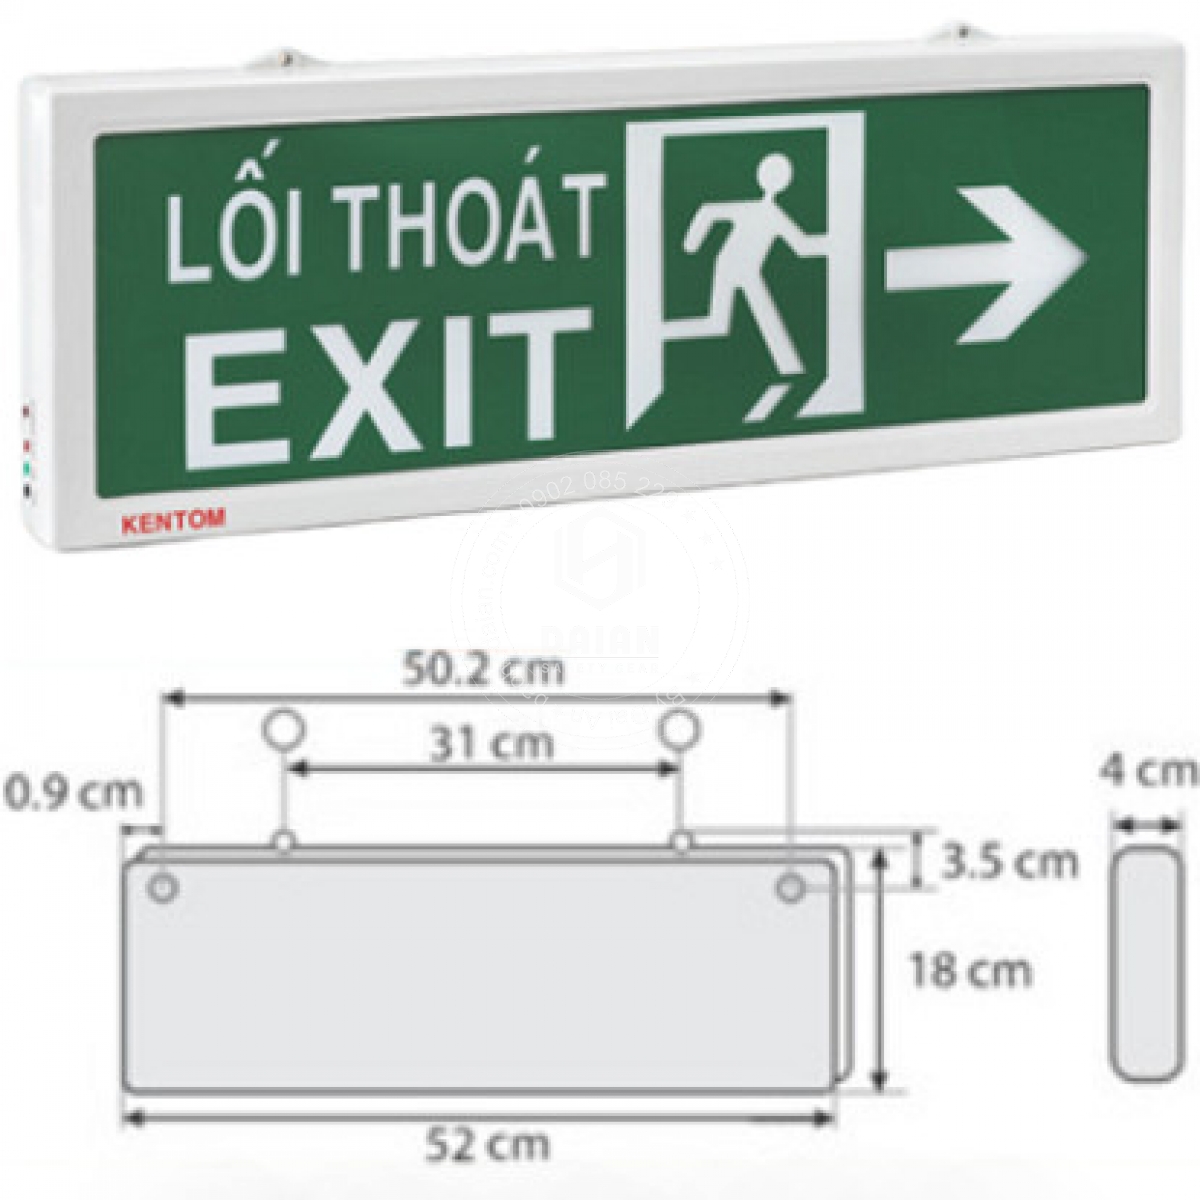 den-exit-thoat-hiem-hai-mat-kentom-kt640